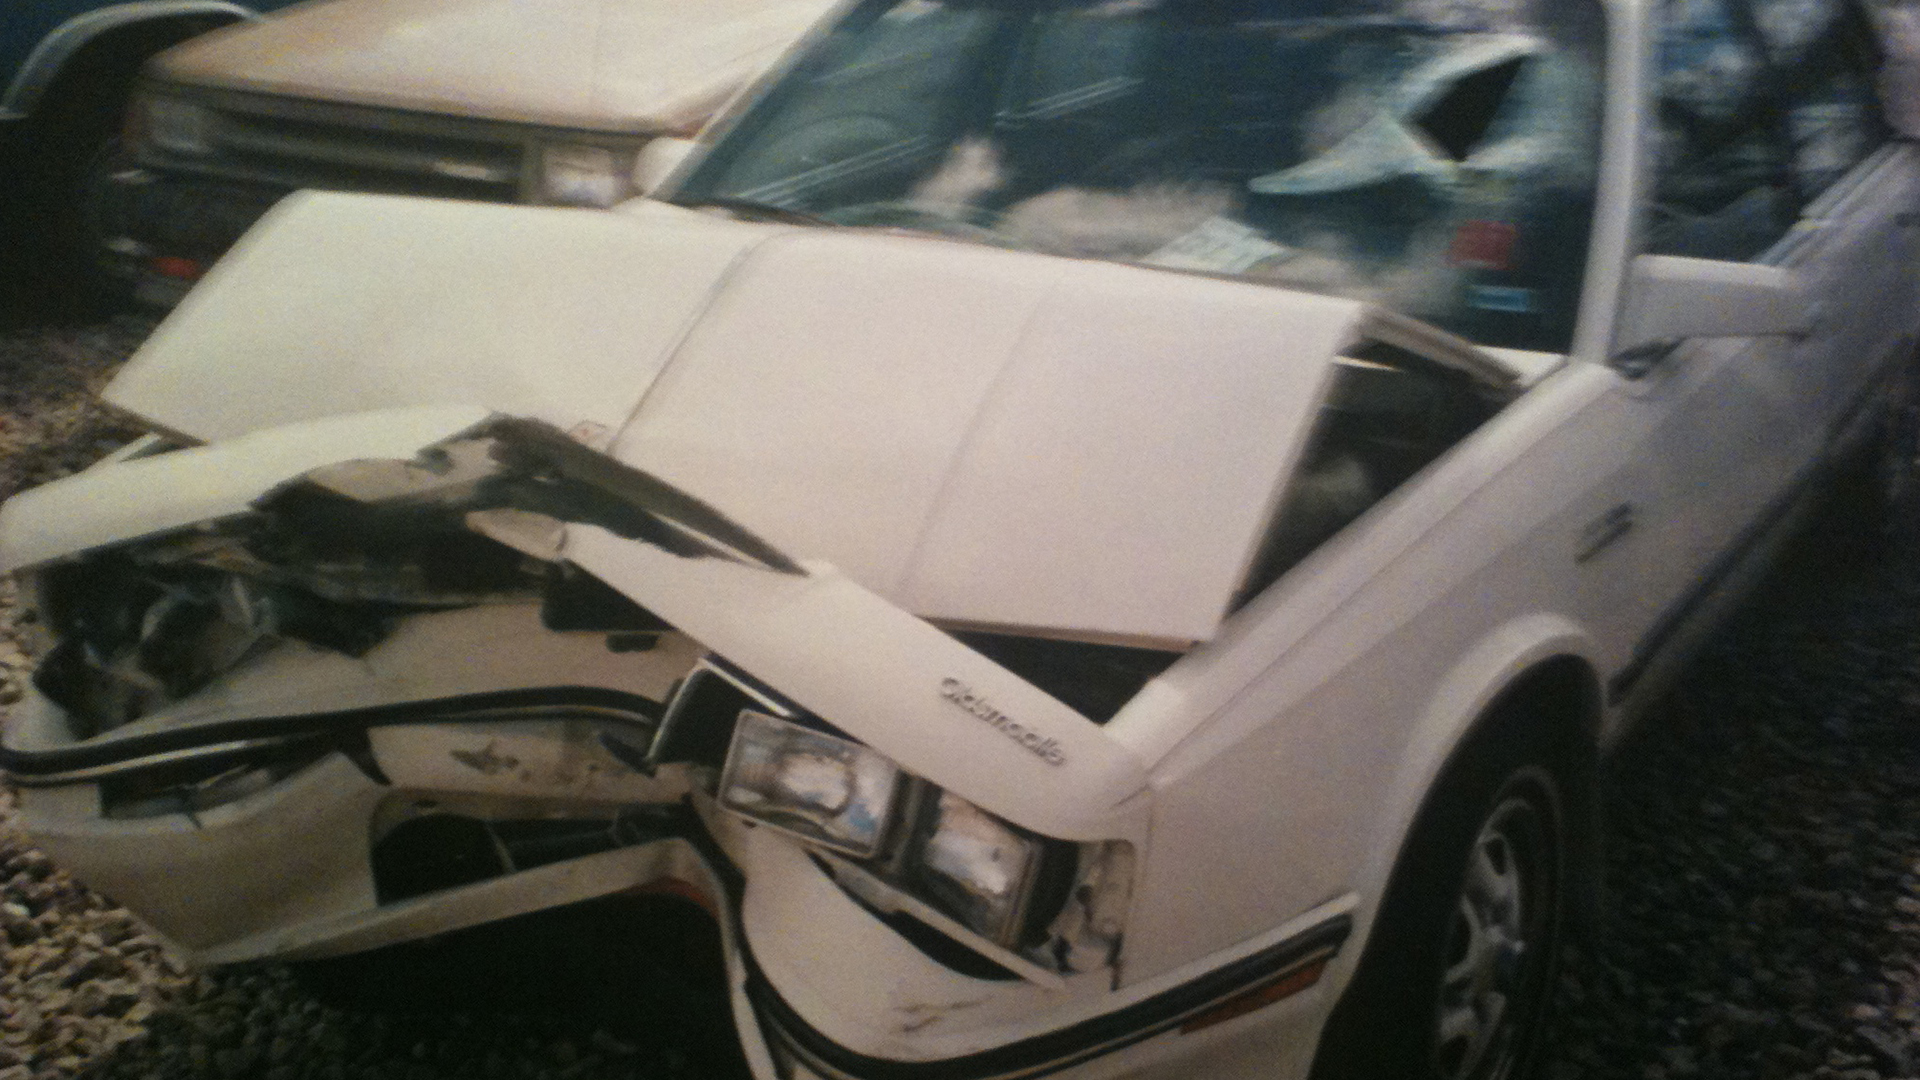 accident_car2.jpg